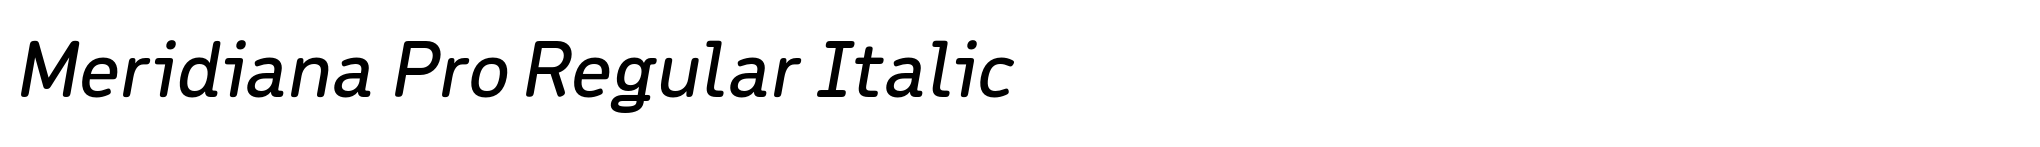 Meridiana Pro Regular Italic image